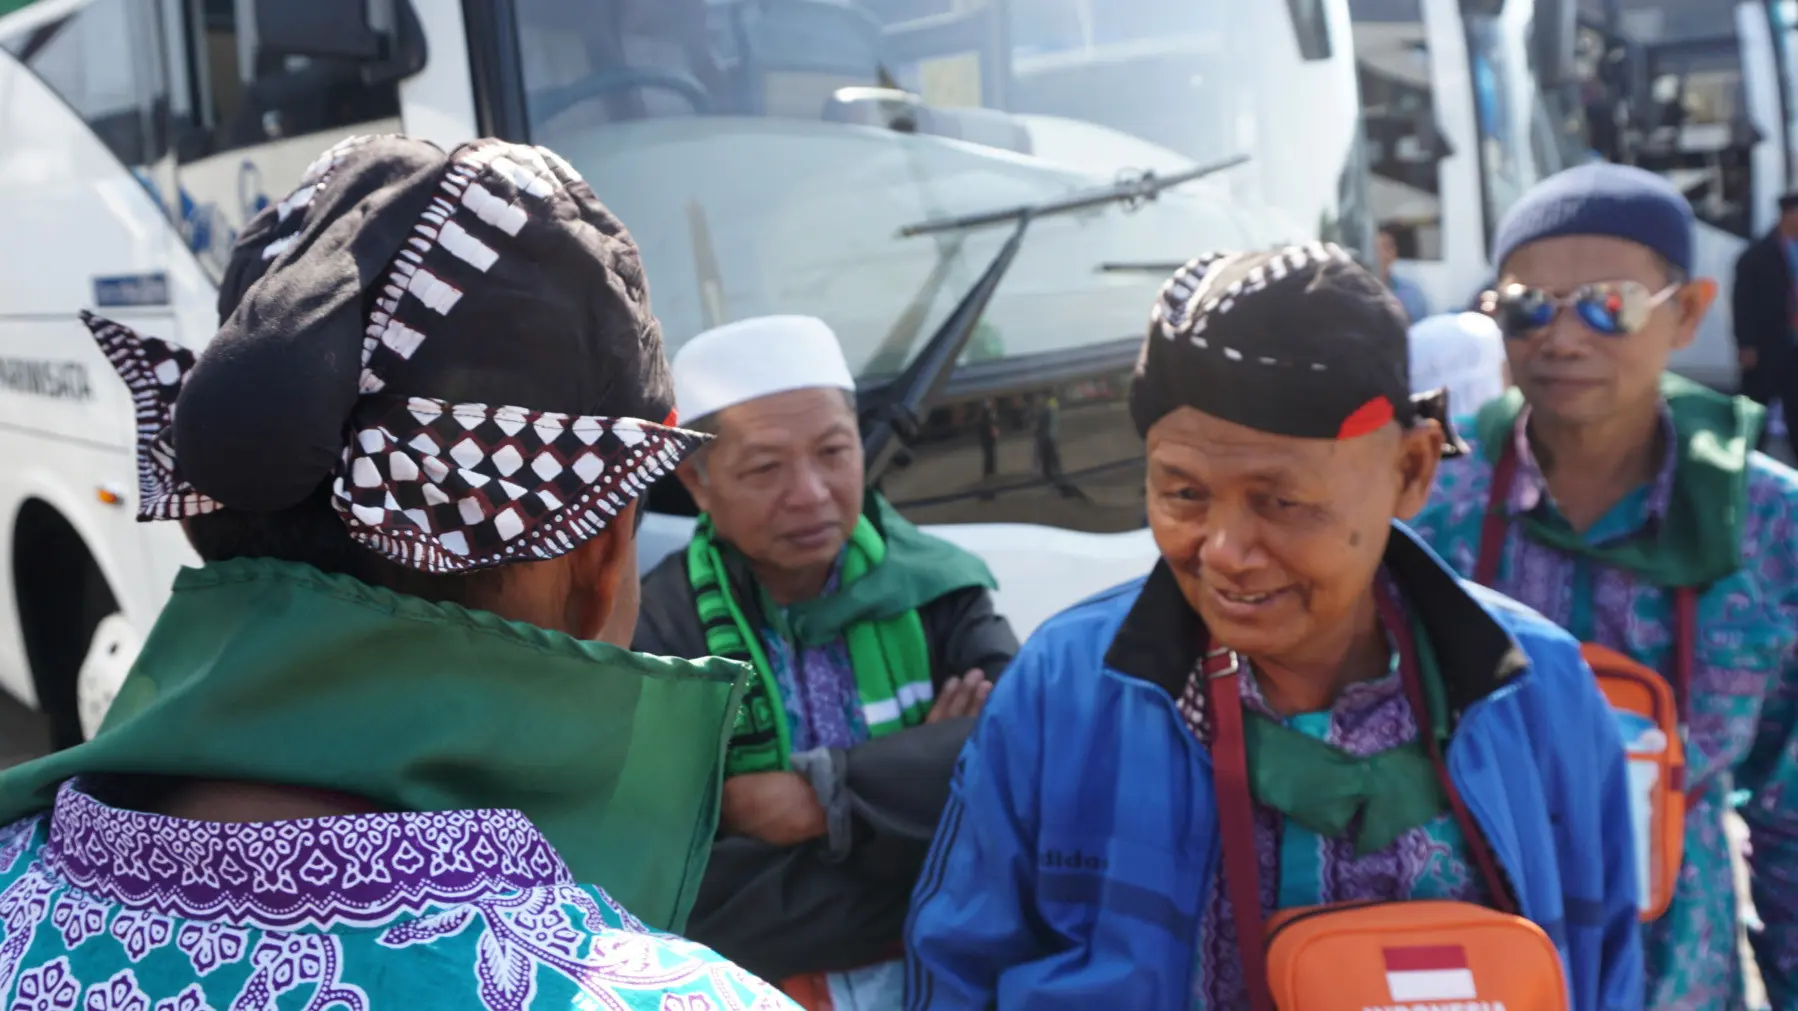 Sejumlah jemaah haji asal Gunungkidul terlihat mengenakan blangkon. Penutup kepala dari pakai adat Jawa digunakan untuk identitas jemaah haji asal Gunungkidul di Tanah Suci.(Liputan6.com/Fajar Abrori)